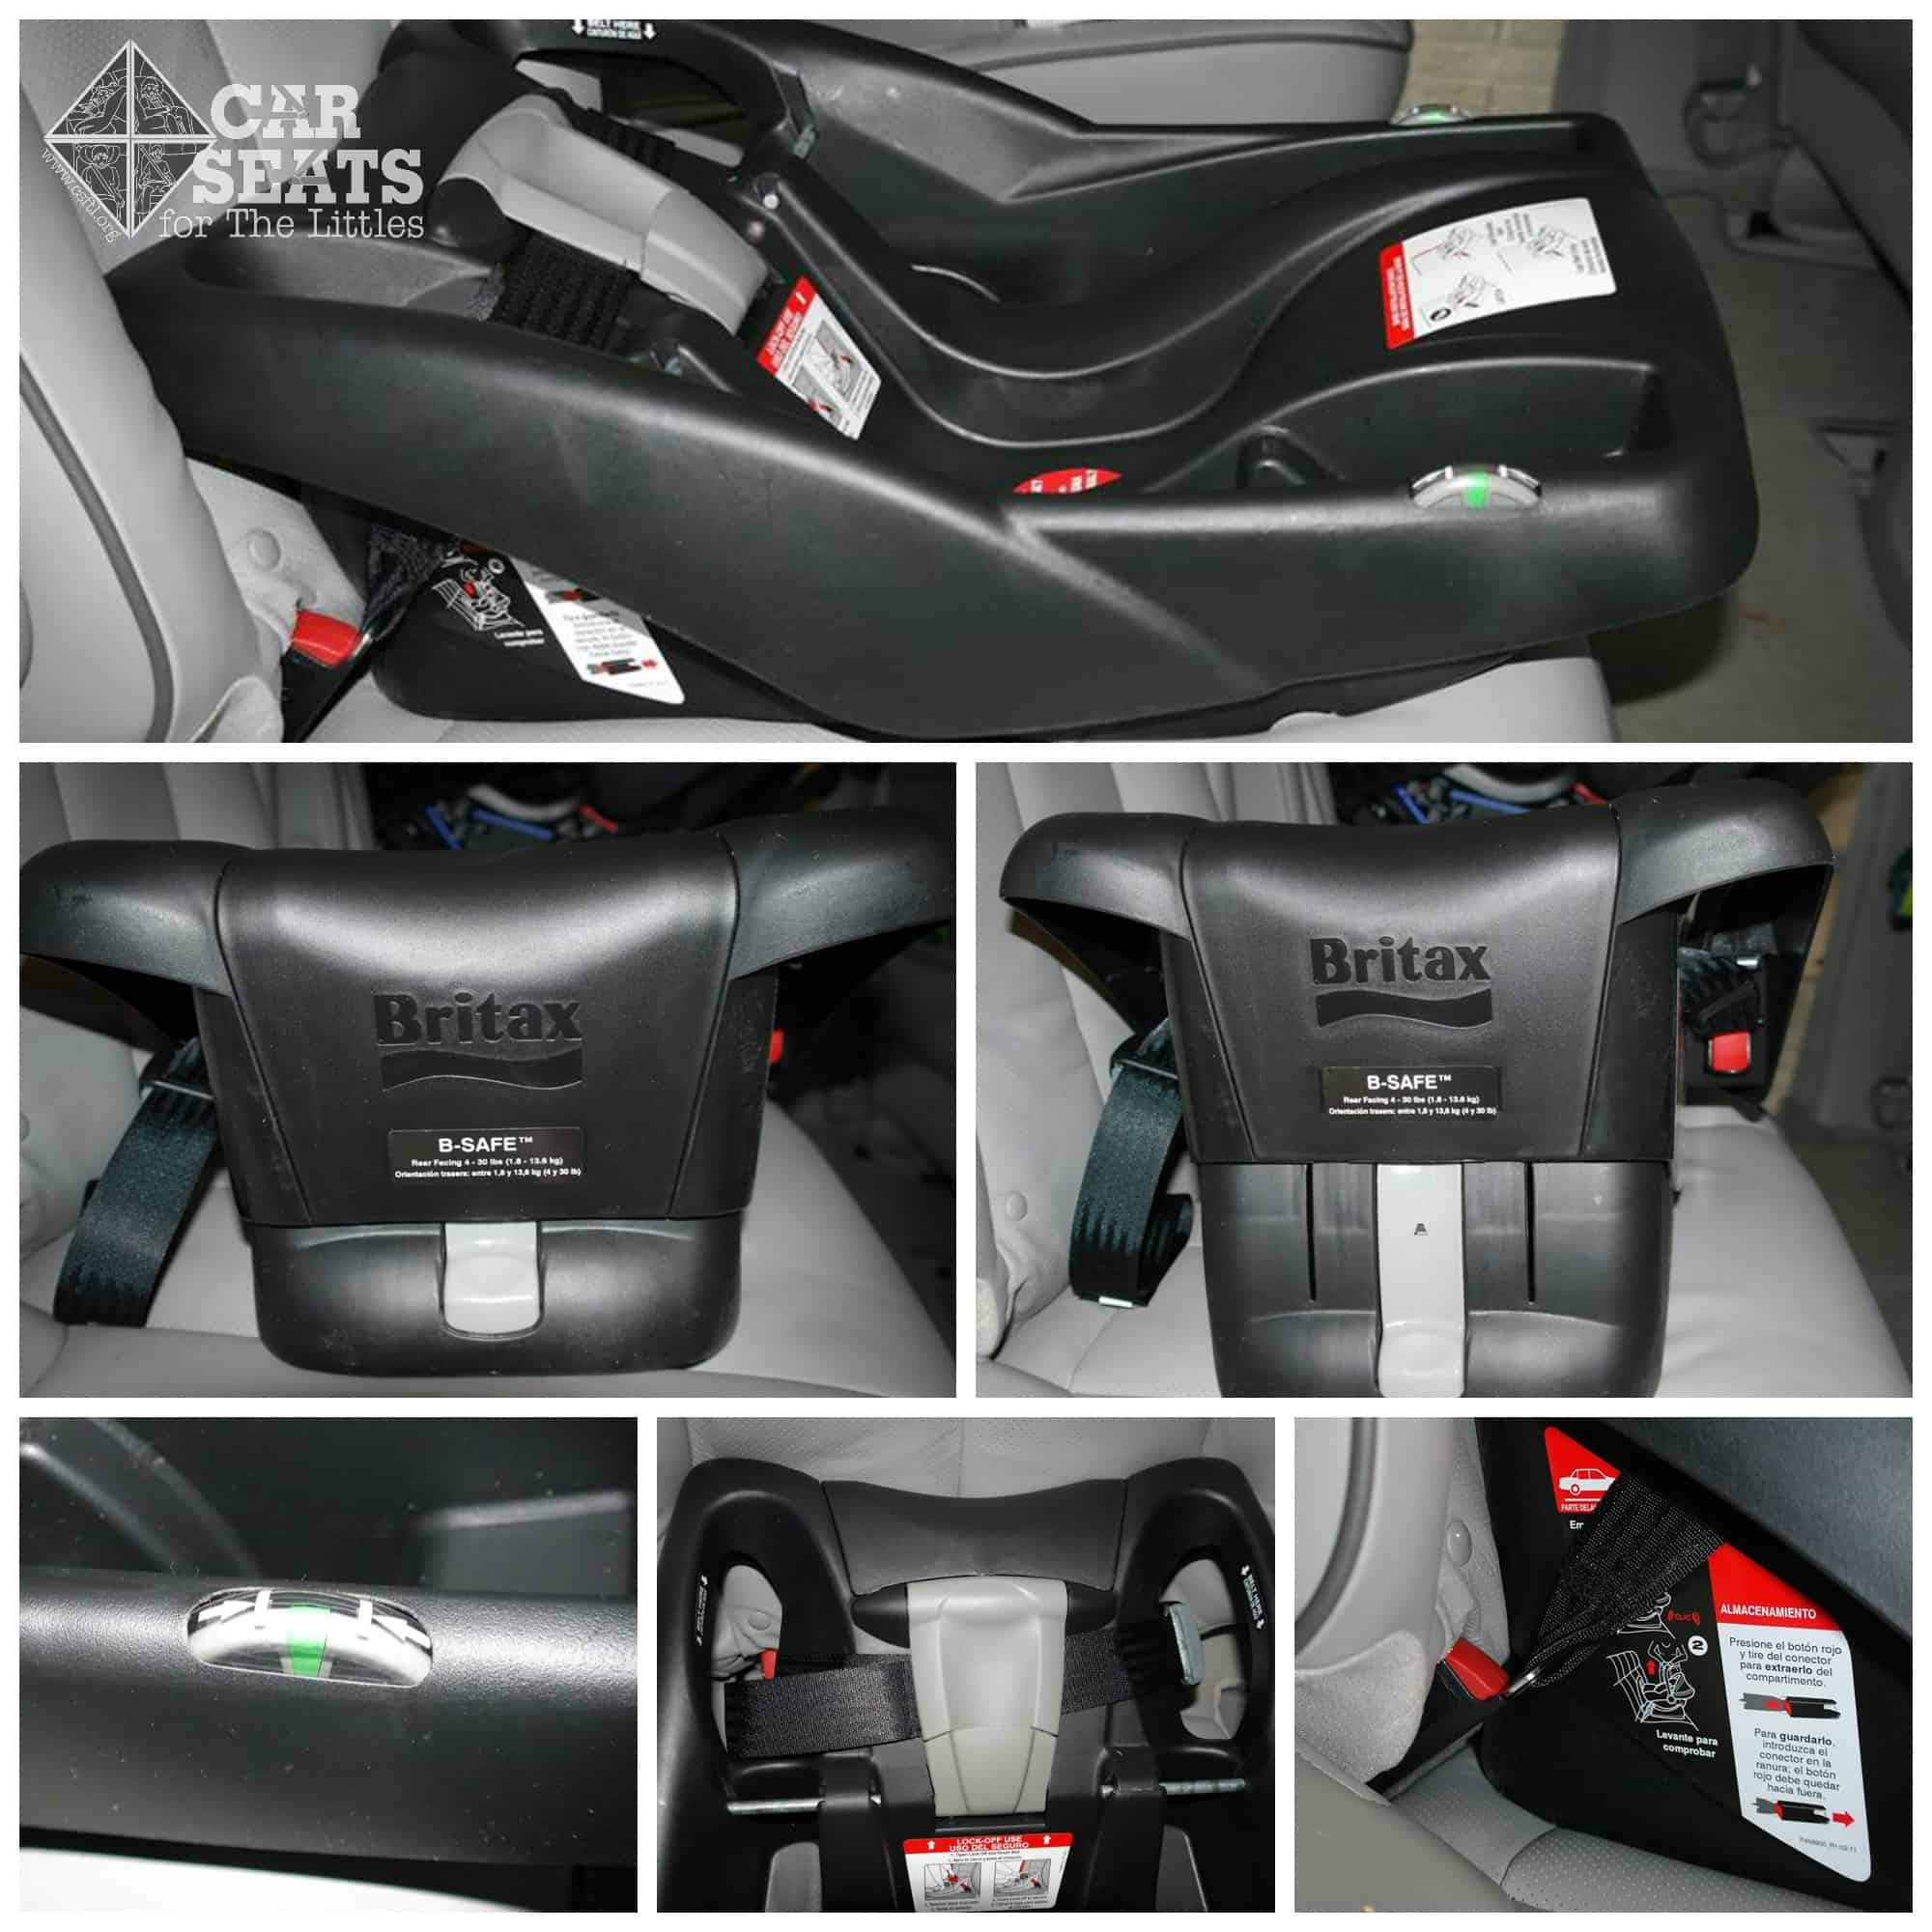 Britax B Safe Review Car Seats For The Littles - Britax B Safe Car Seat Harness Adjustment